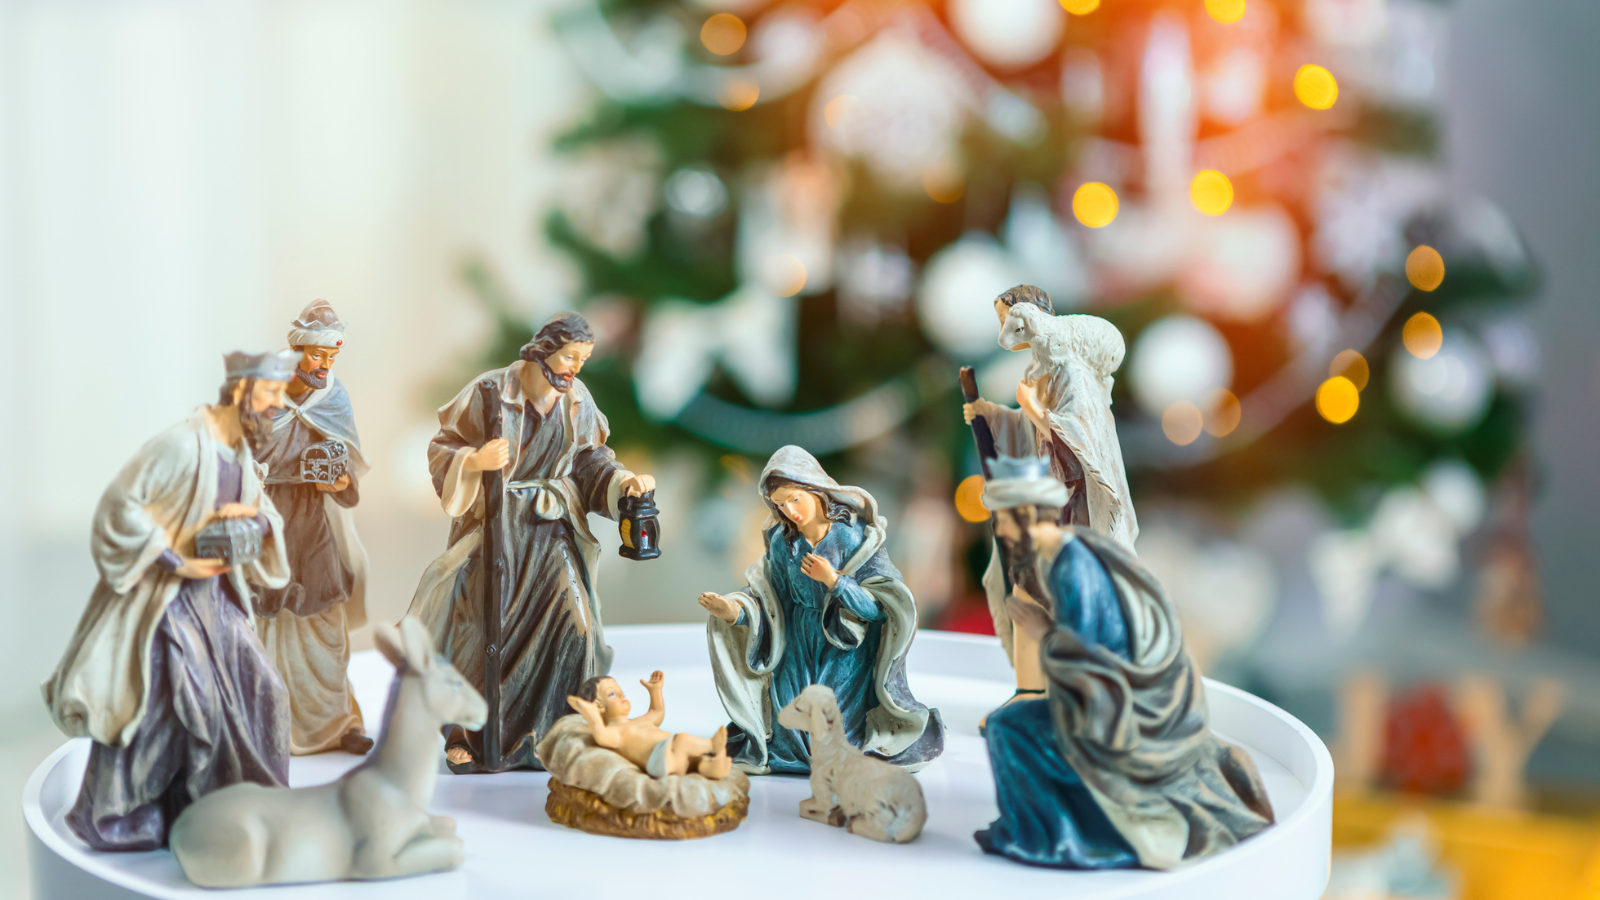 A nativity scene display.